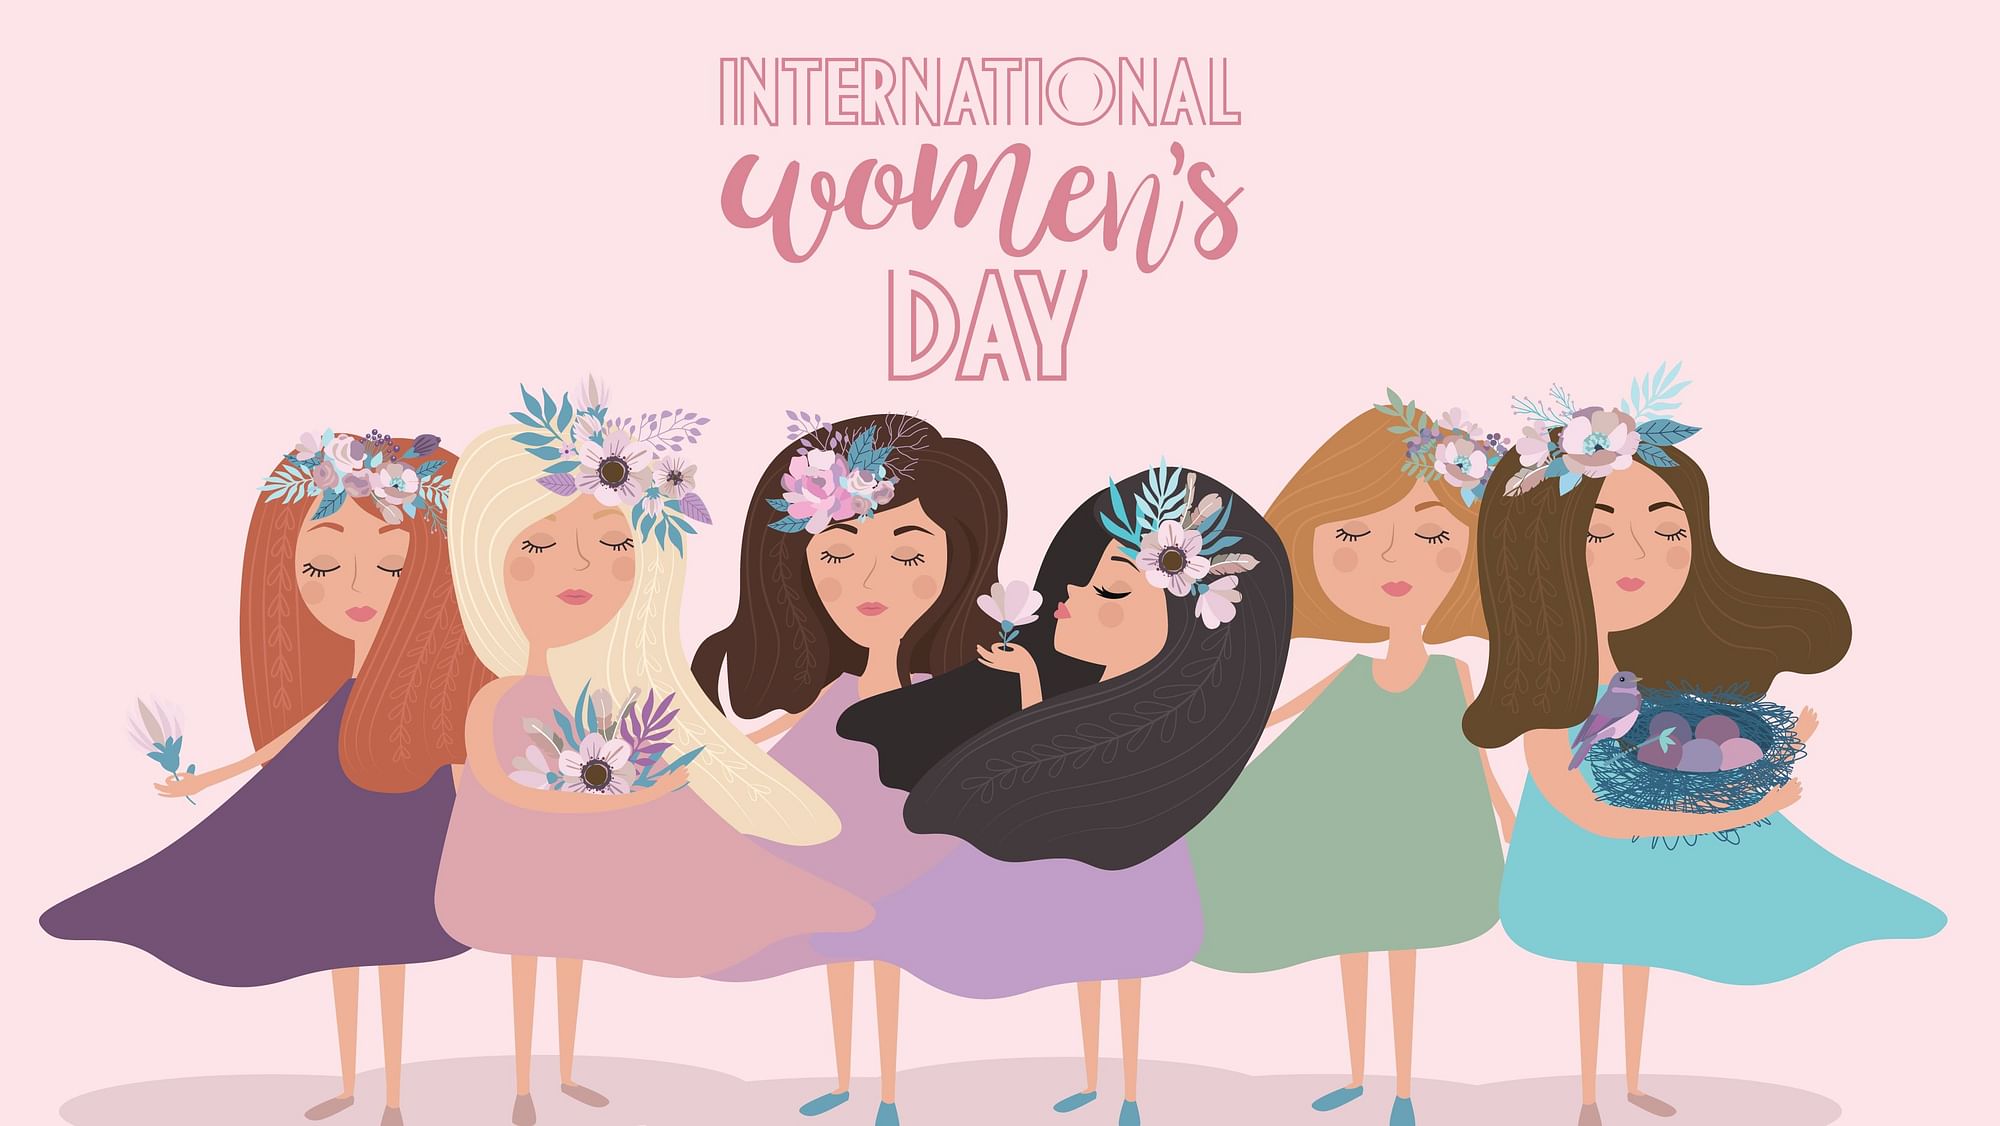  International Women’s Day 2021